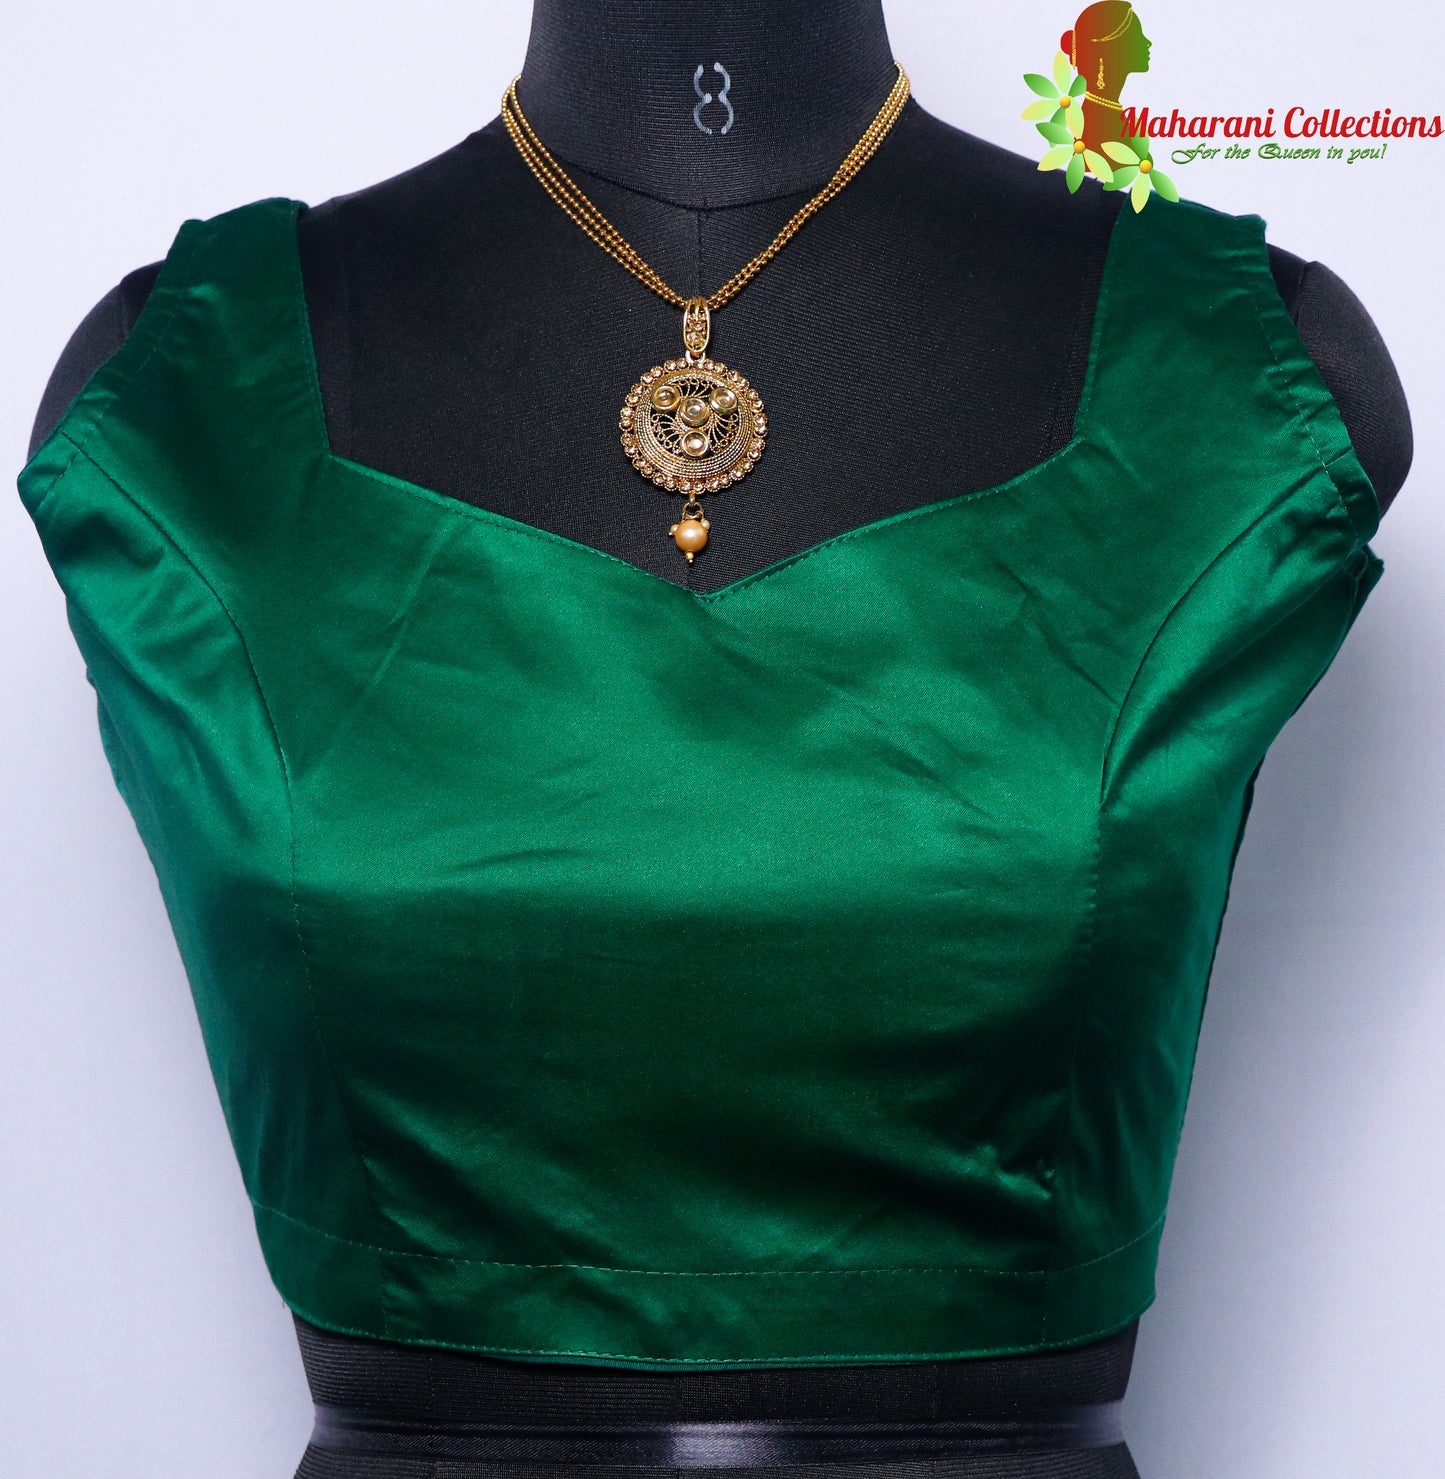 Maharani's Satin Silk Sleeveless Blouse - Green